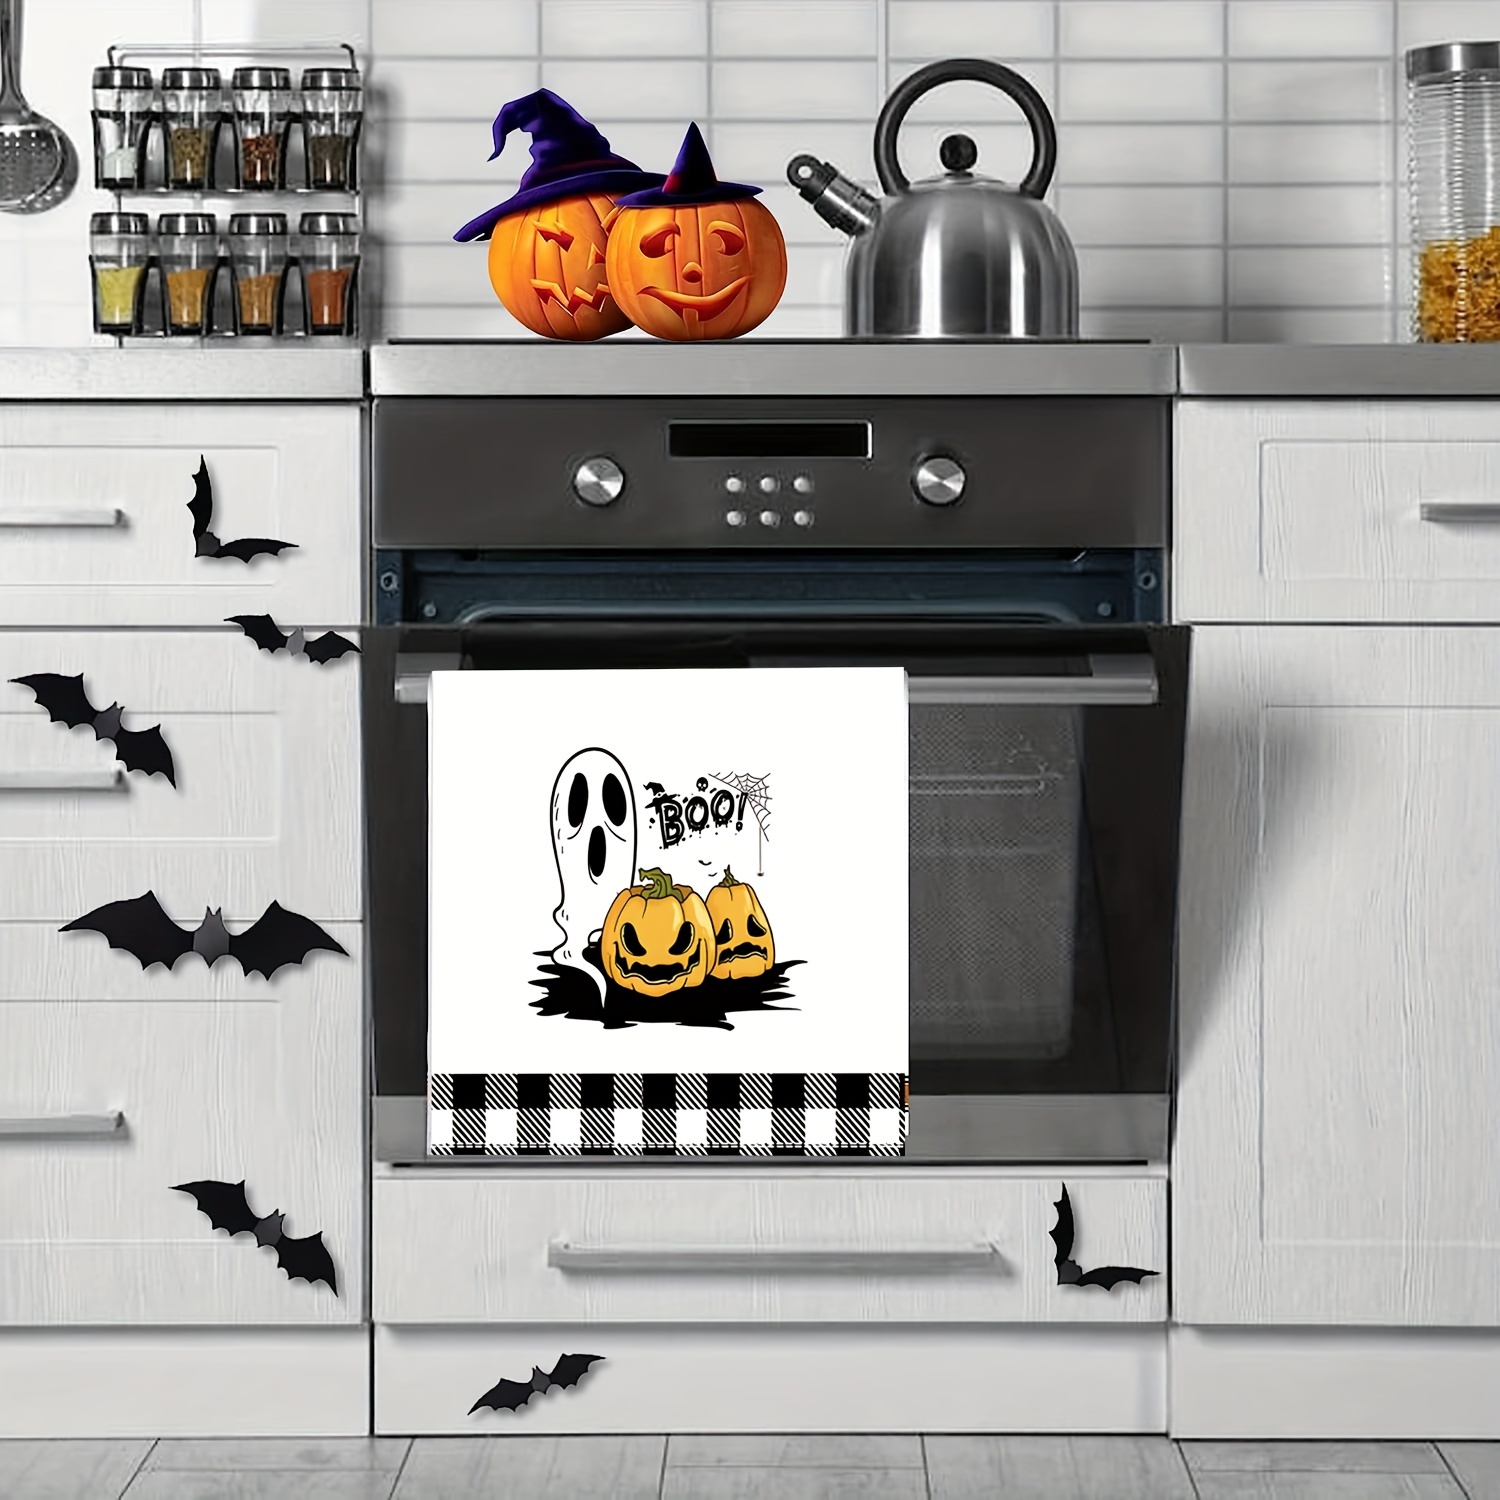 Decorative Towel Trick or Treat Halloween Set/2 Jacquard Kitchen 108128-108129, Men's, Size: 28 in H x 20 in W x .25 in D, Orange